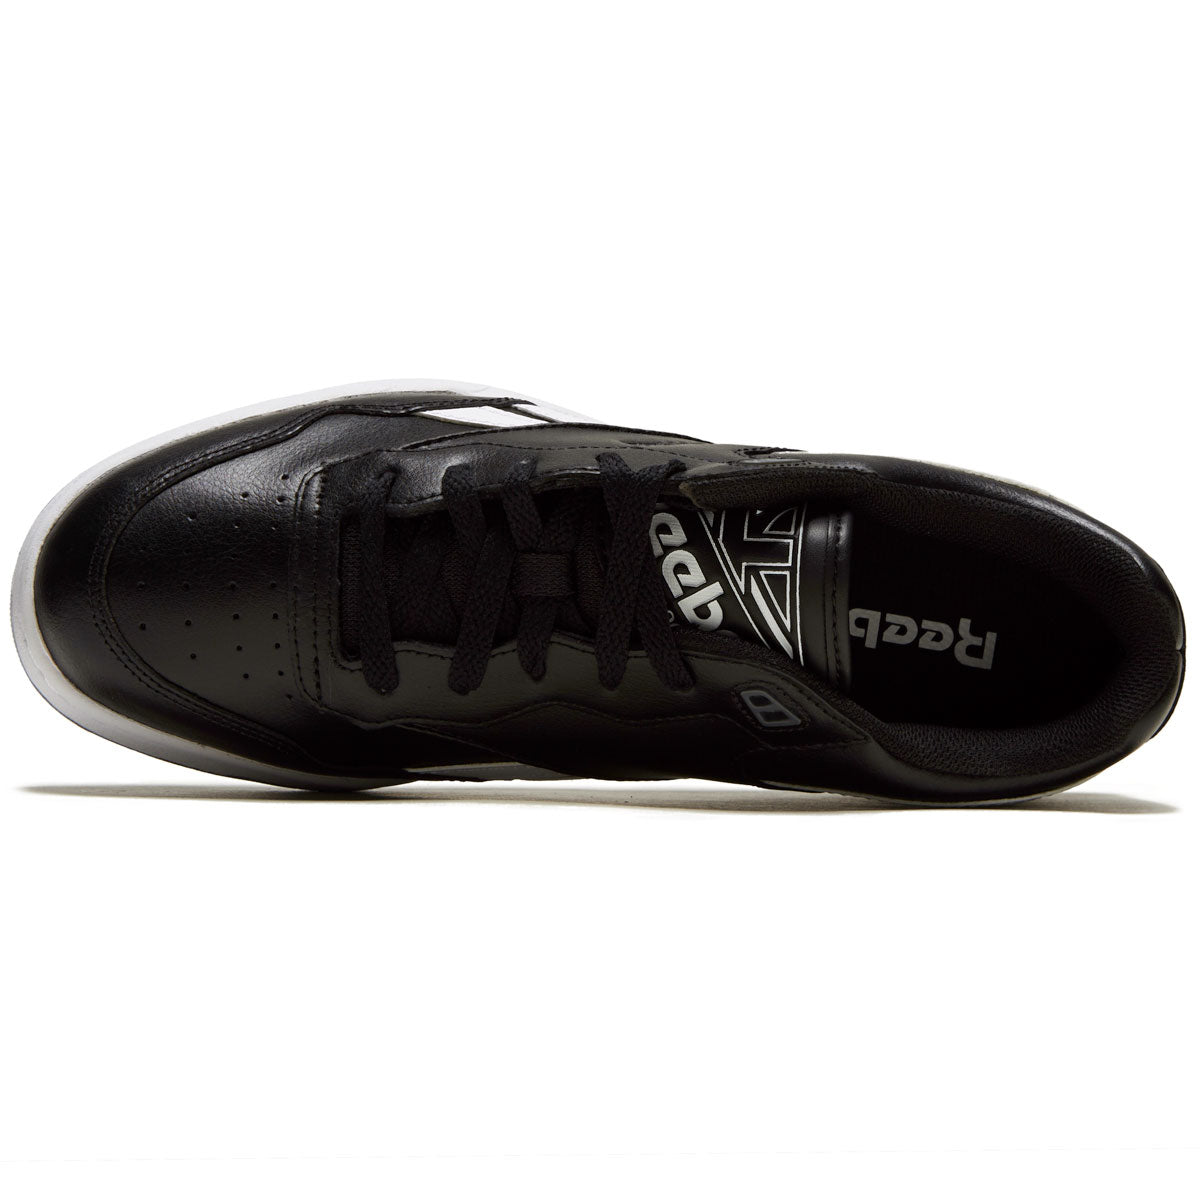 Reebok BB 4000 II Shoes - Black/White/Pure Grey image 3